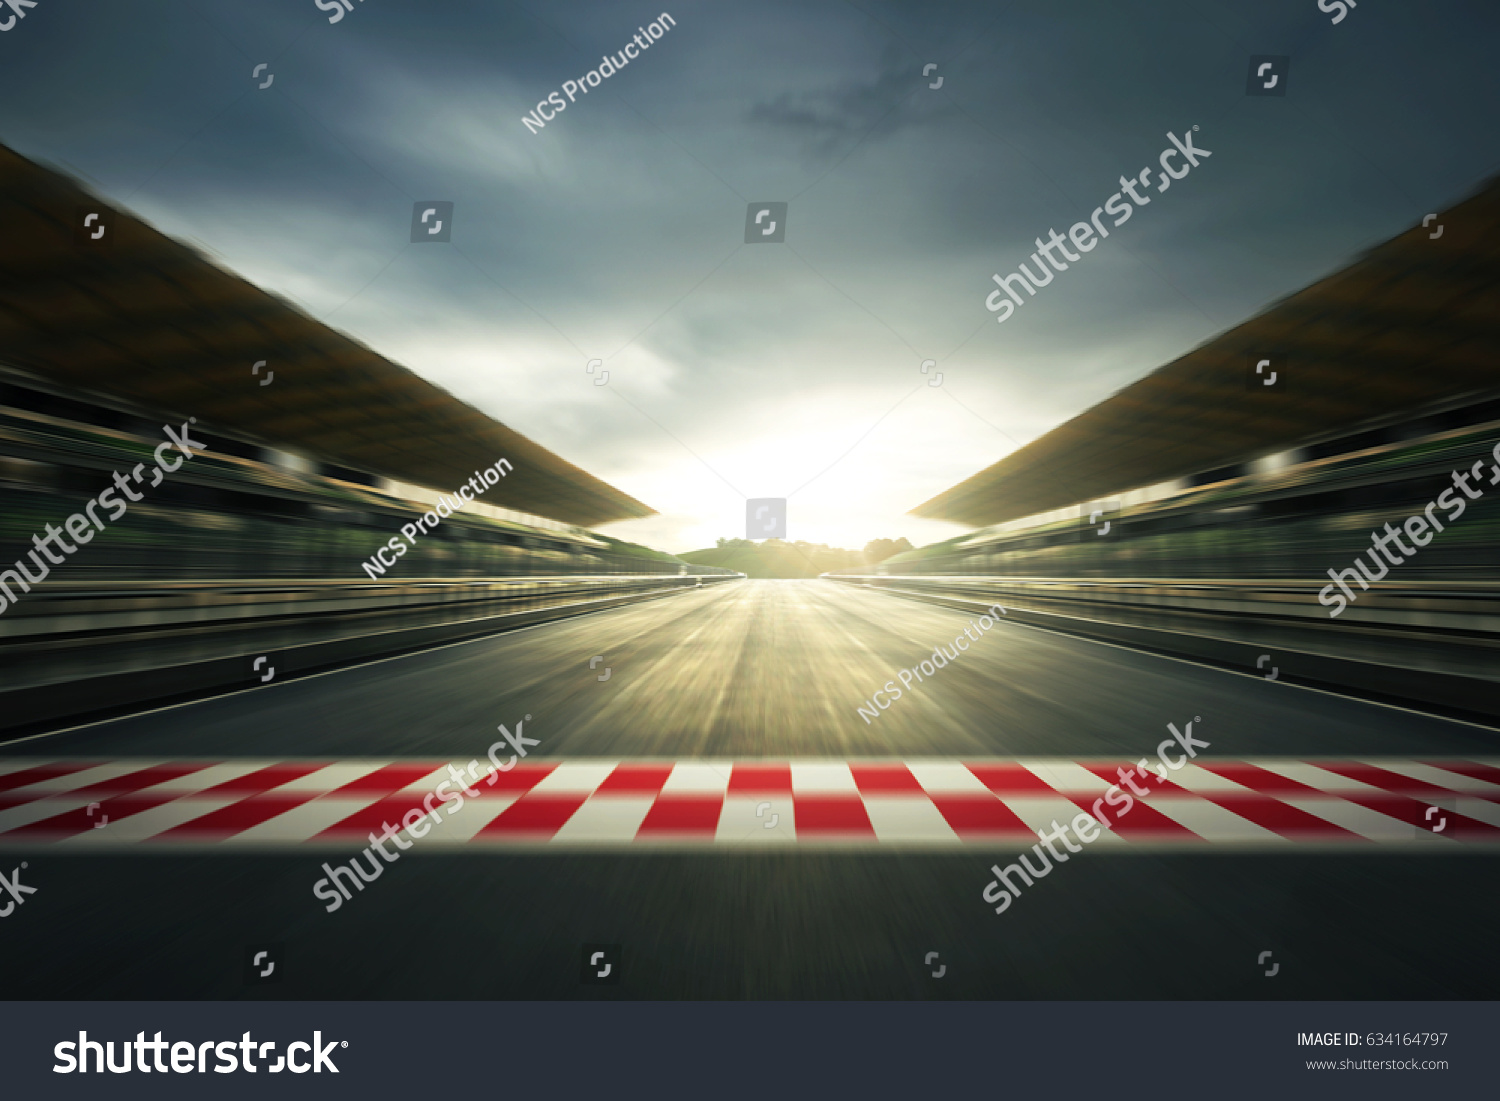 F1 evening circuit motion blur road #634164797